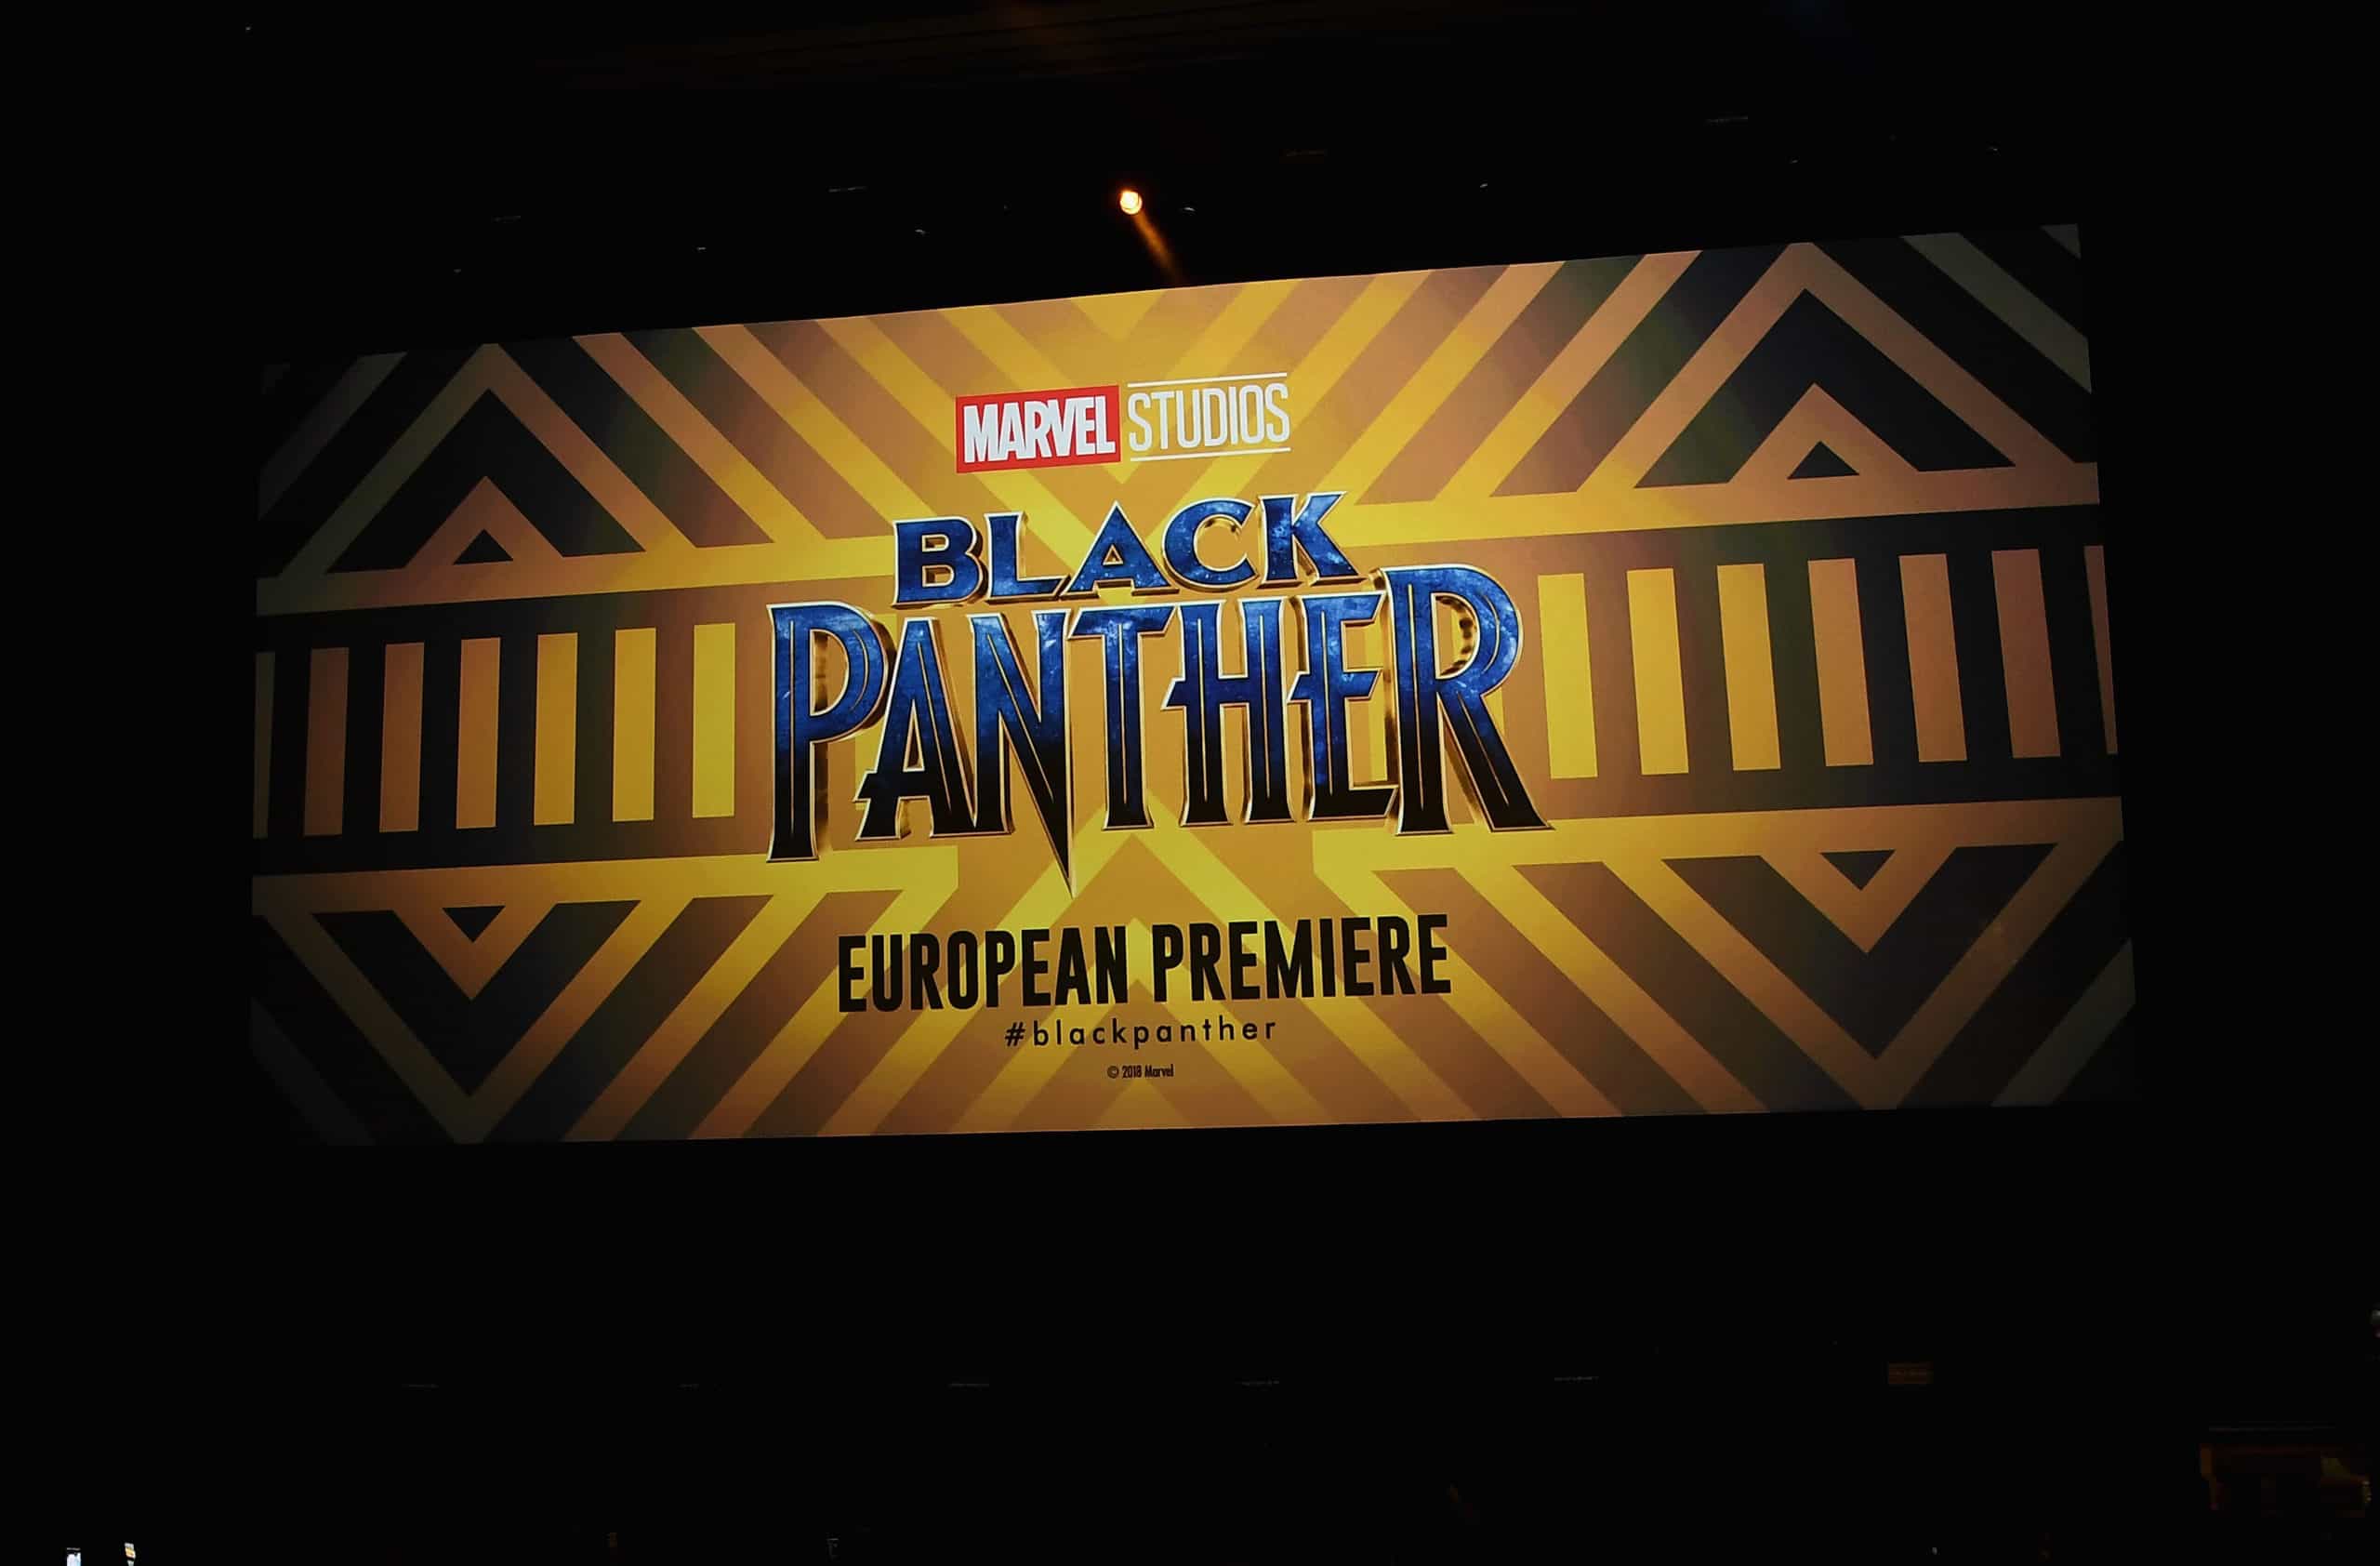 Black Panther: Wakanda Forever begins production in Atlanta